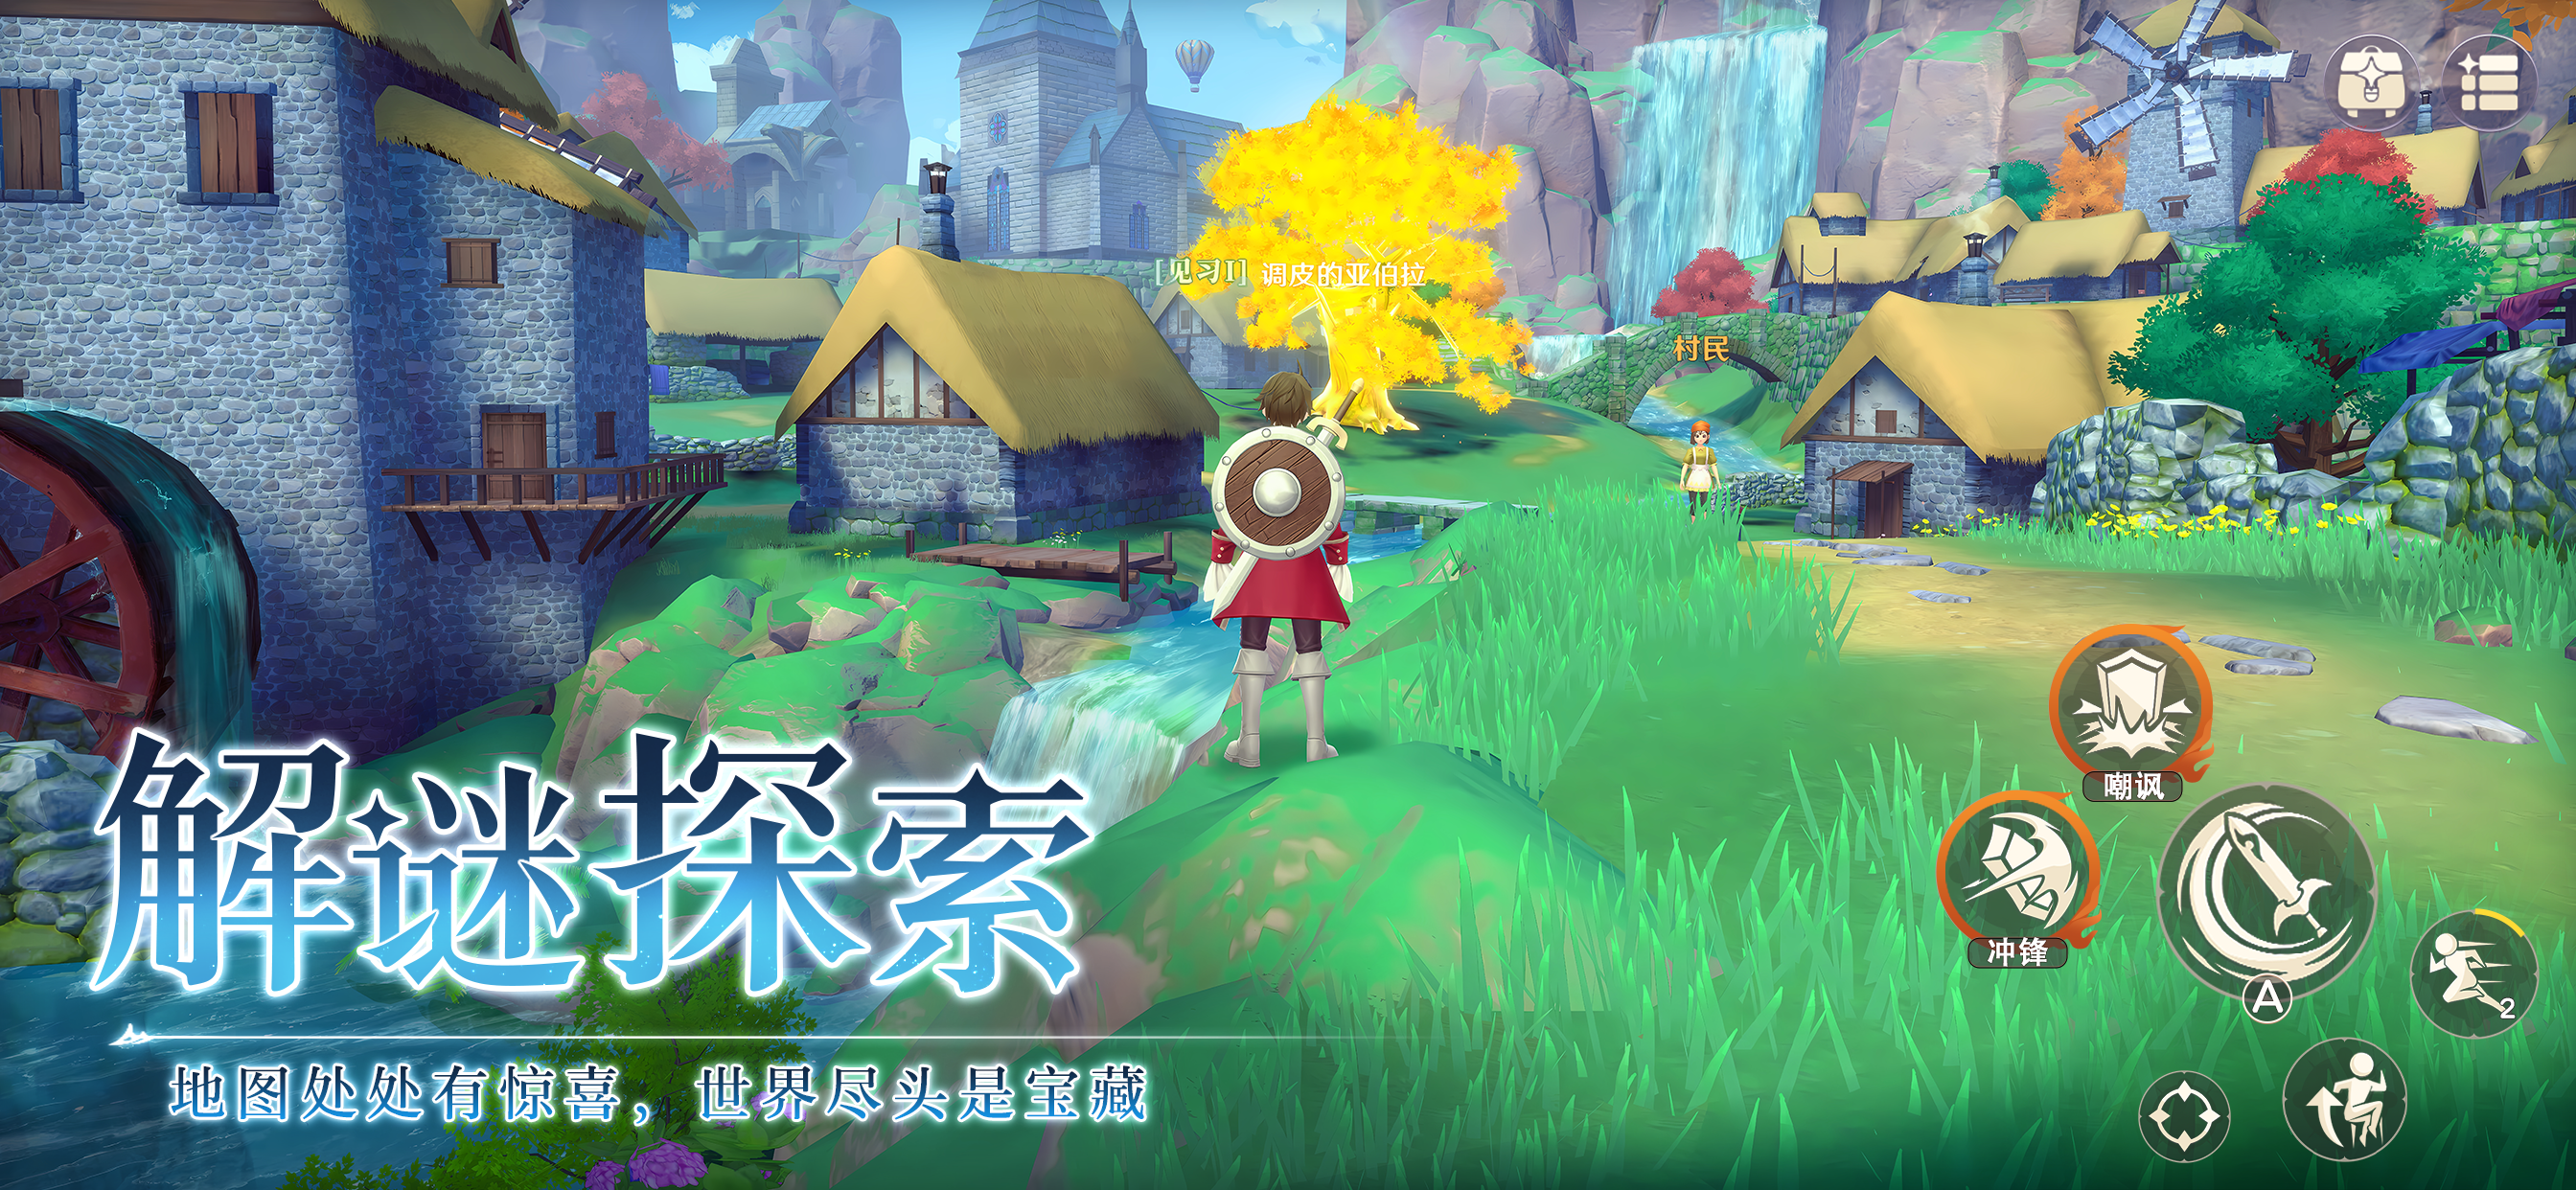 Screenshot of 龙之国度